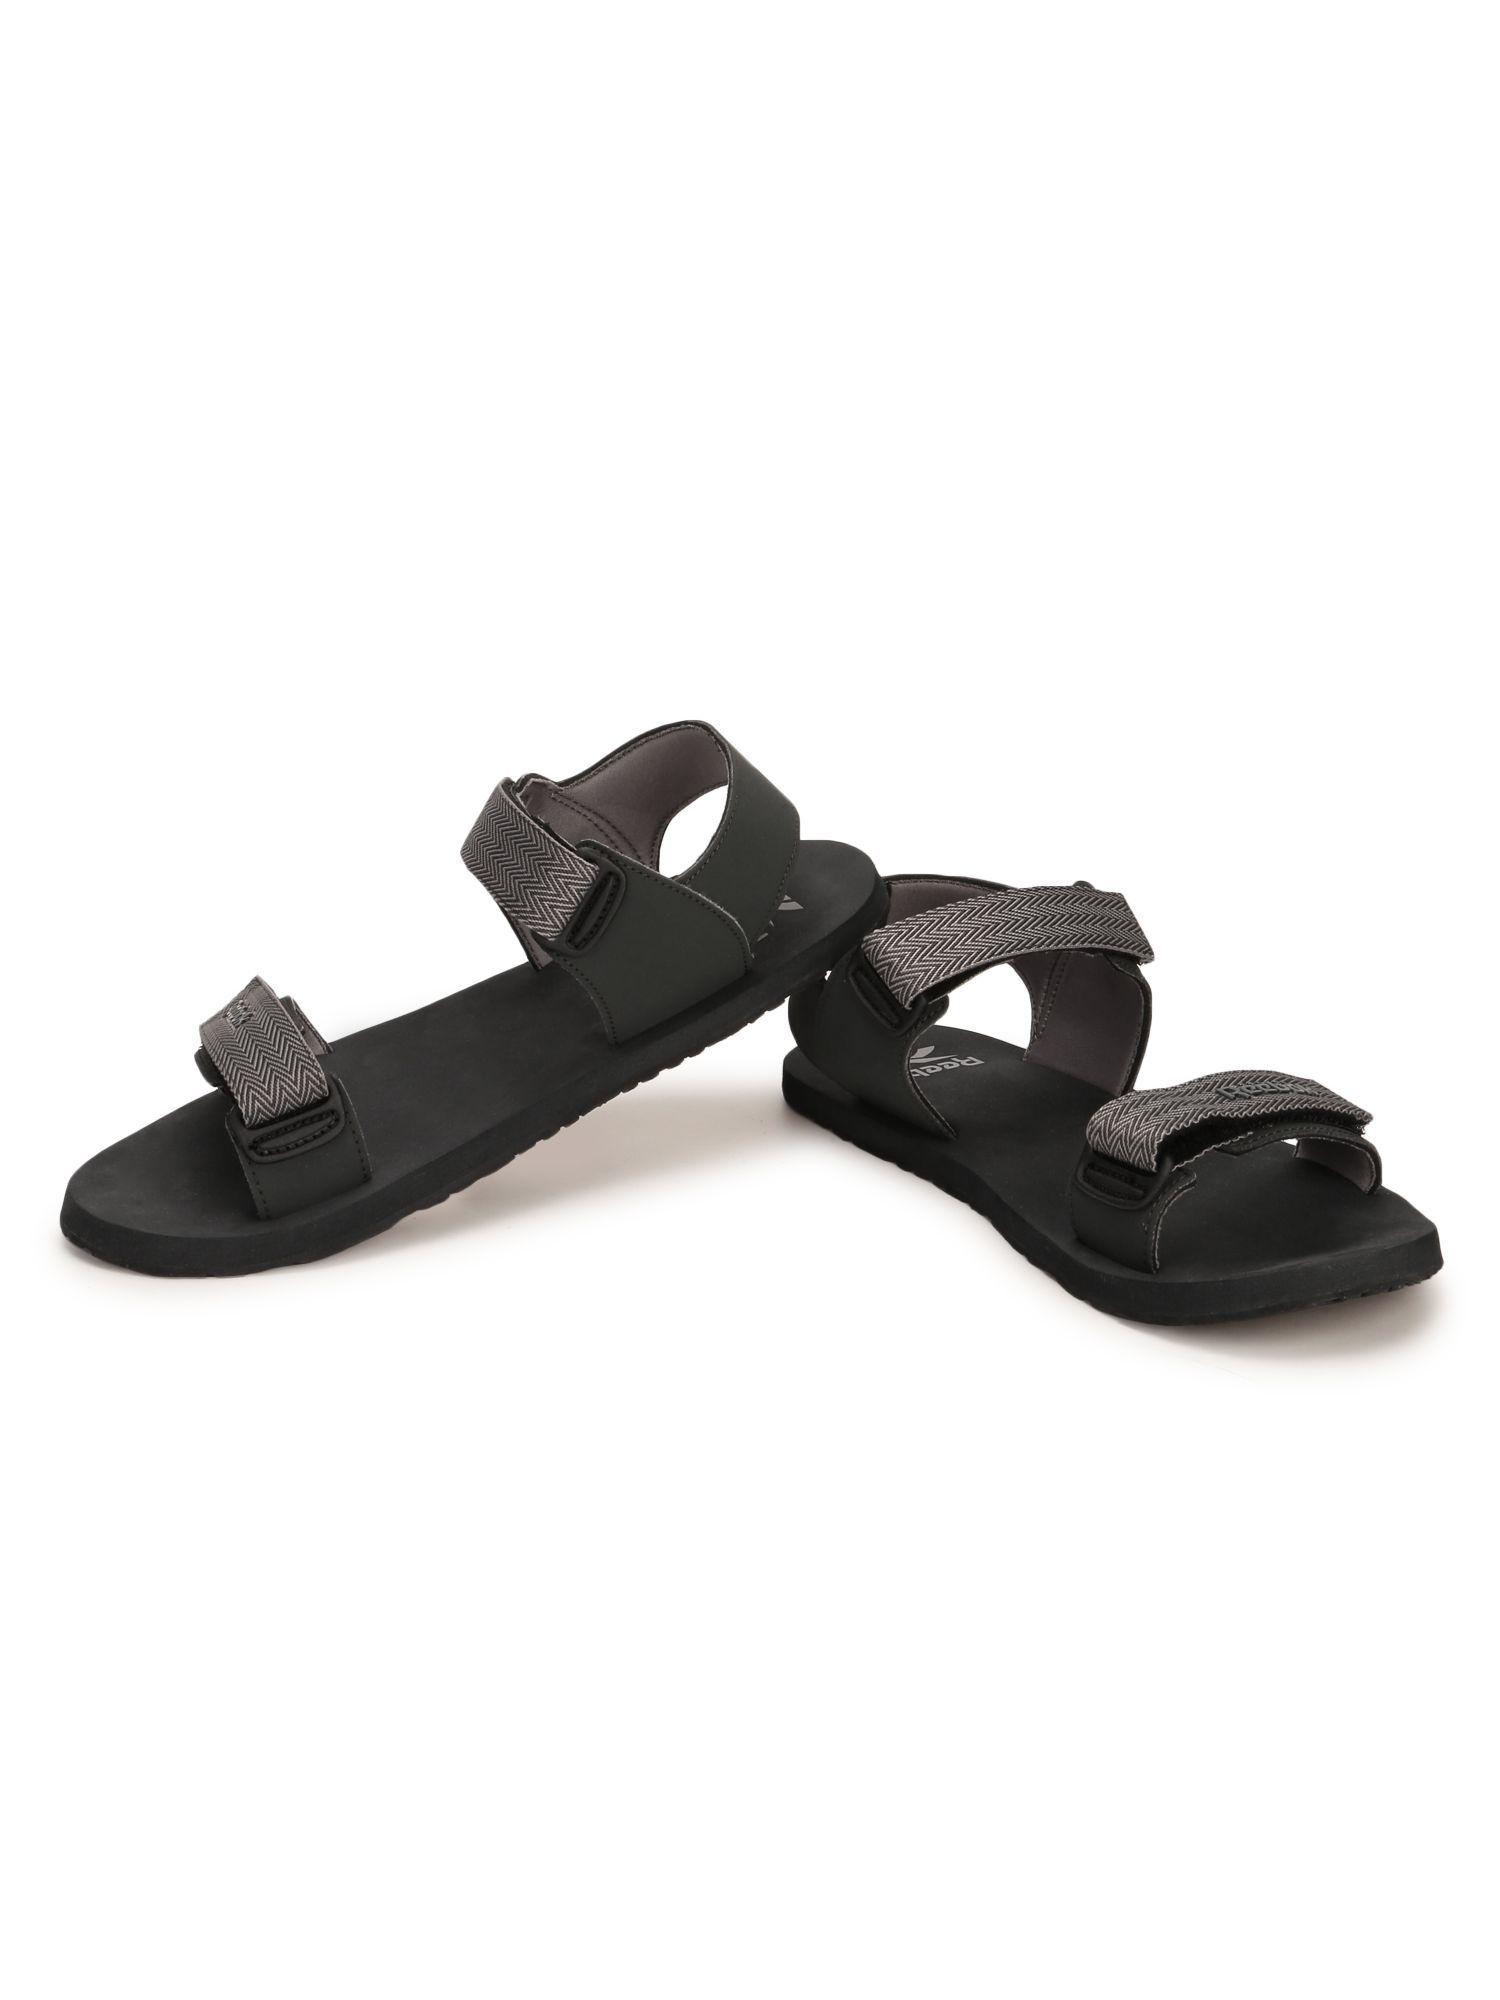 vm-max-pro-grey-swim-sandal